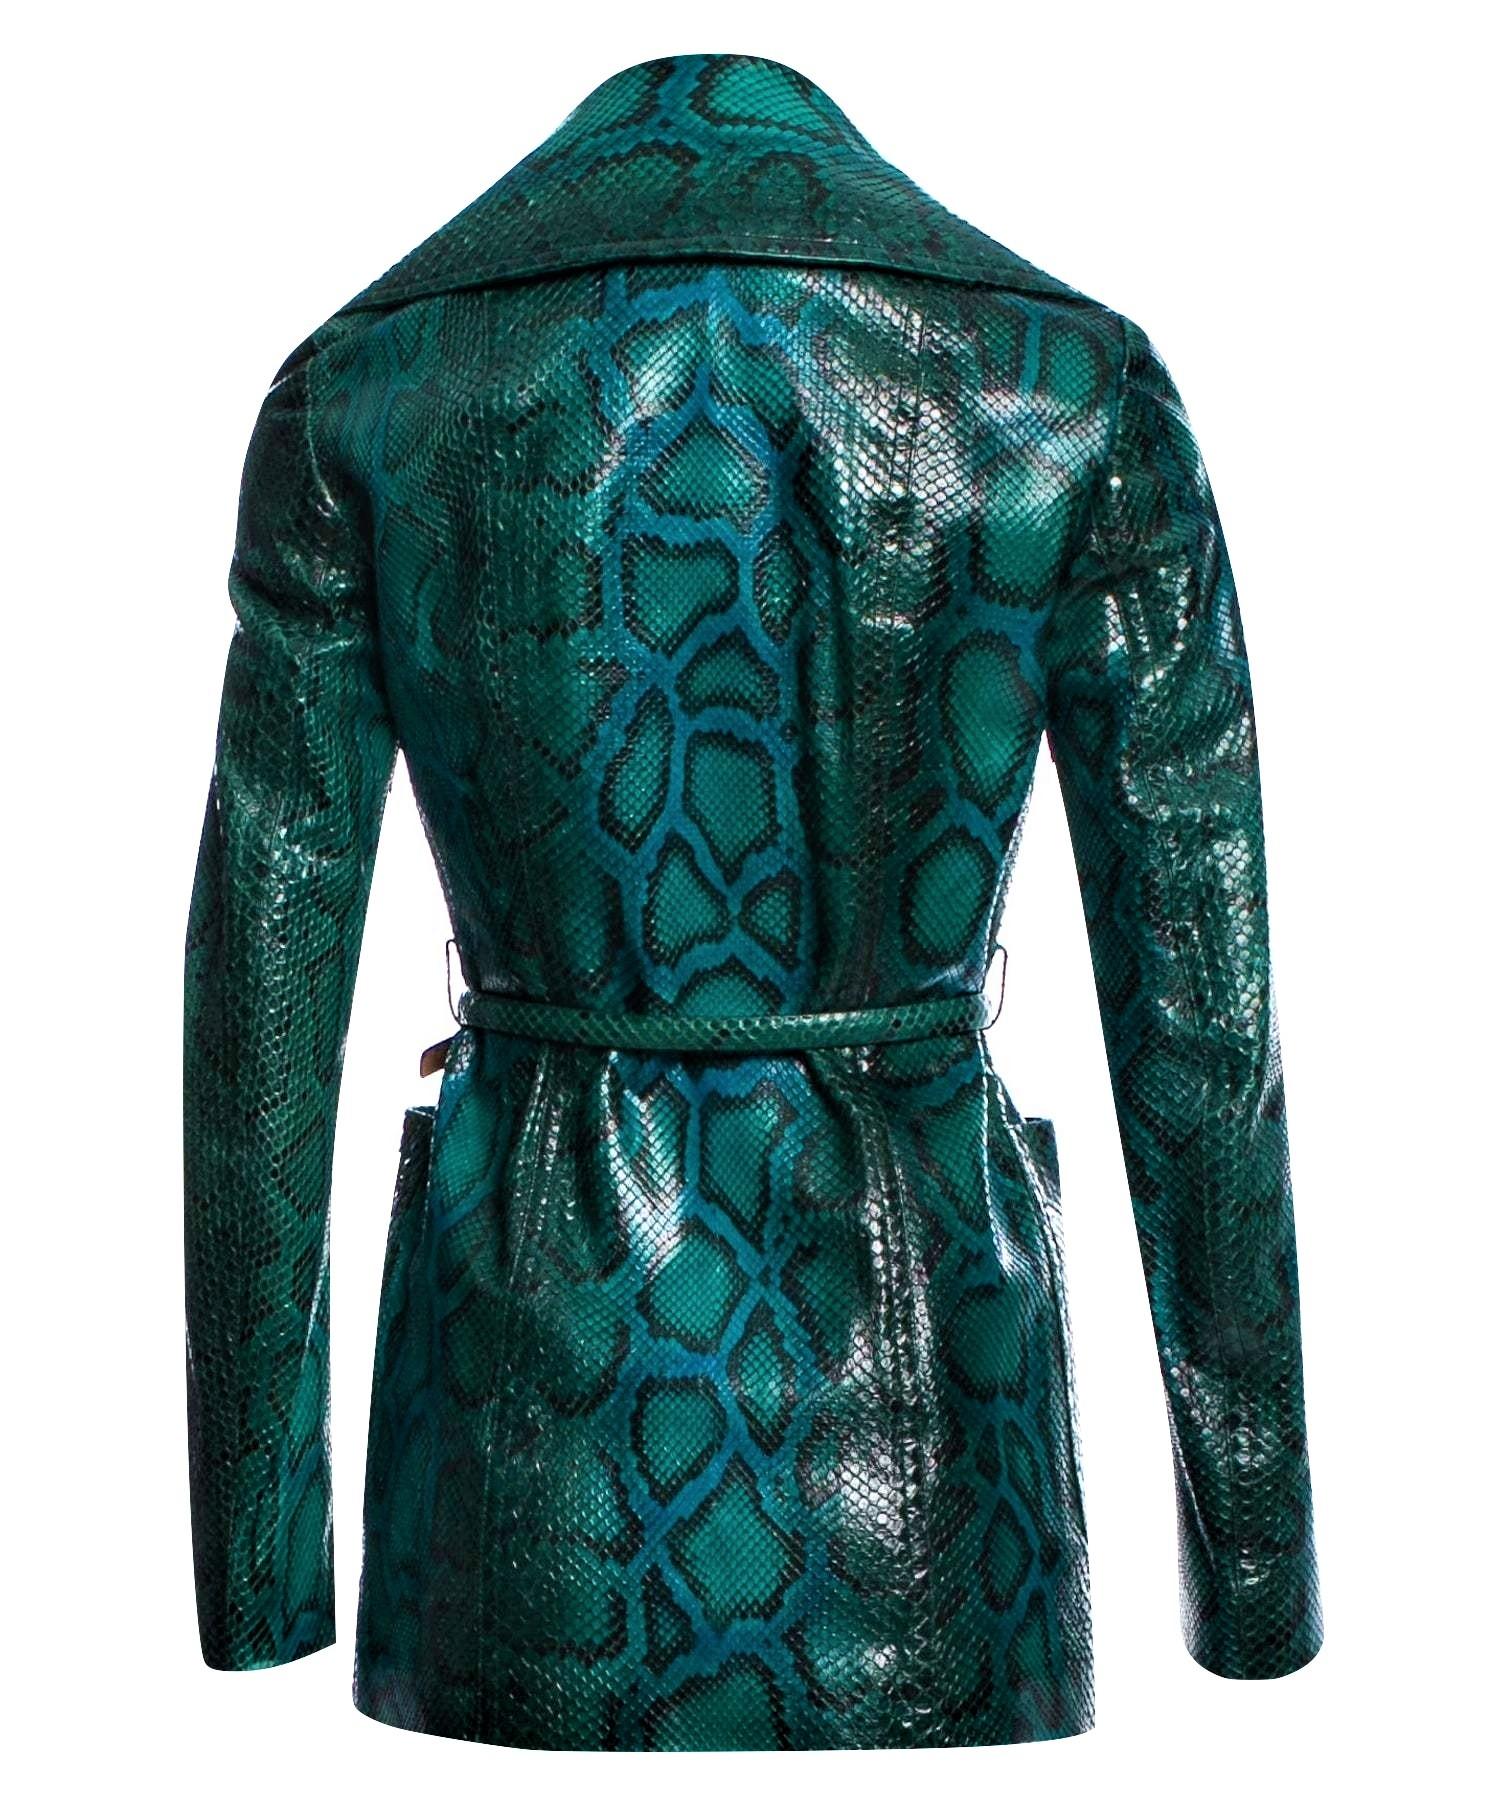 New Rare Gucci 90th Anniversary Python Snakeskin Jacket Coat Blazer $14.650 For Sale 5